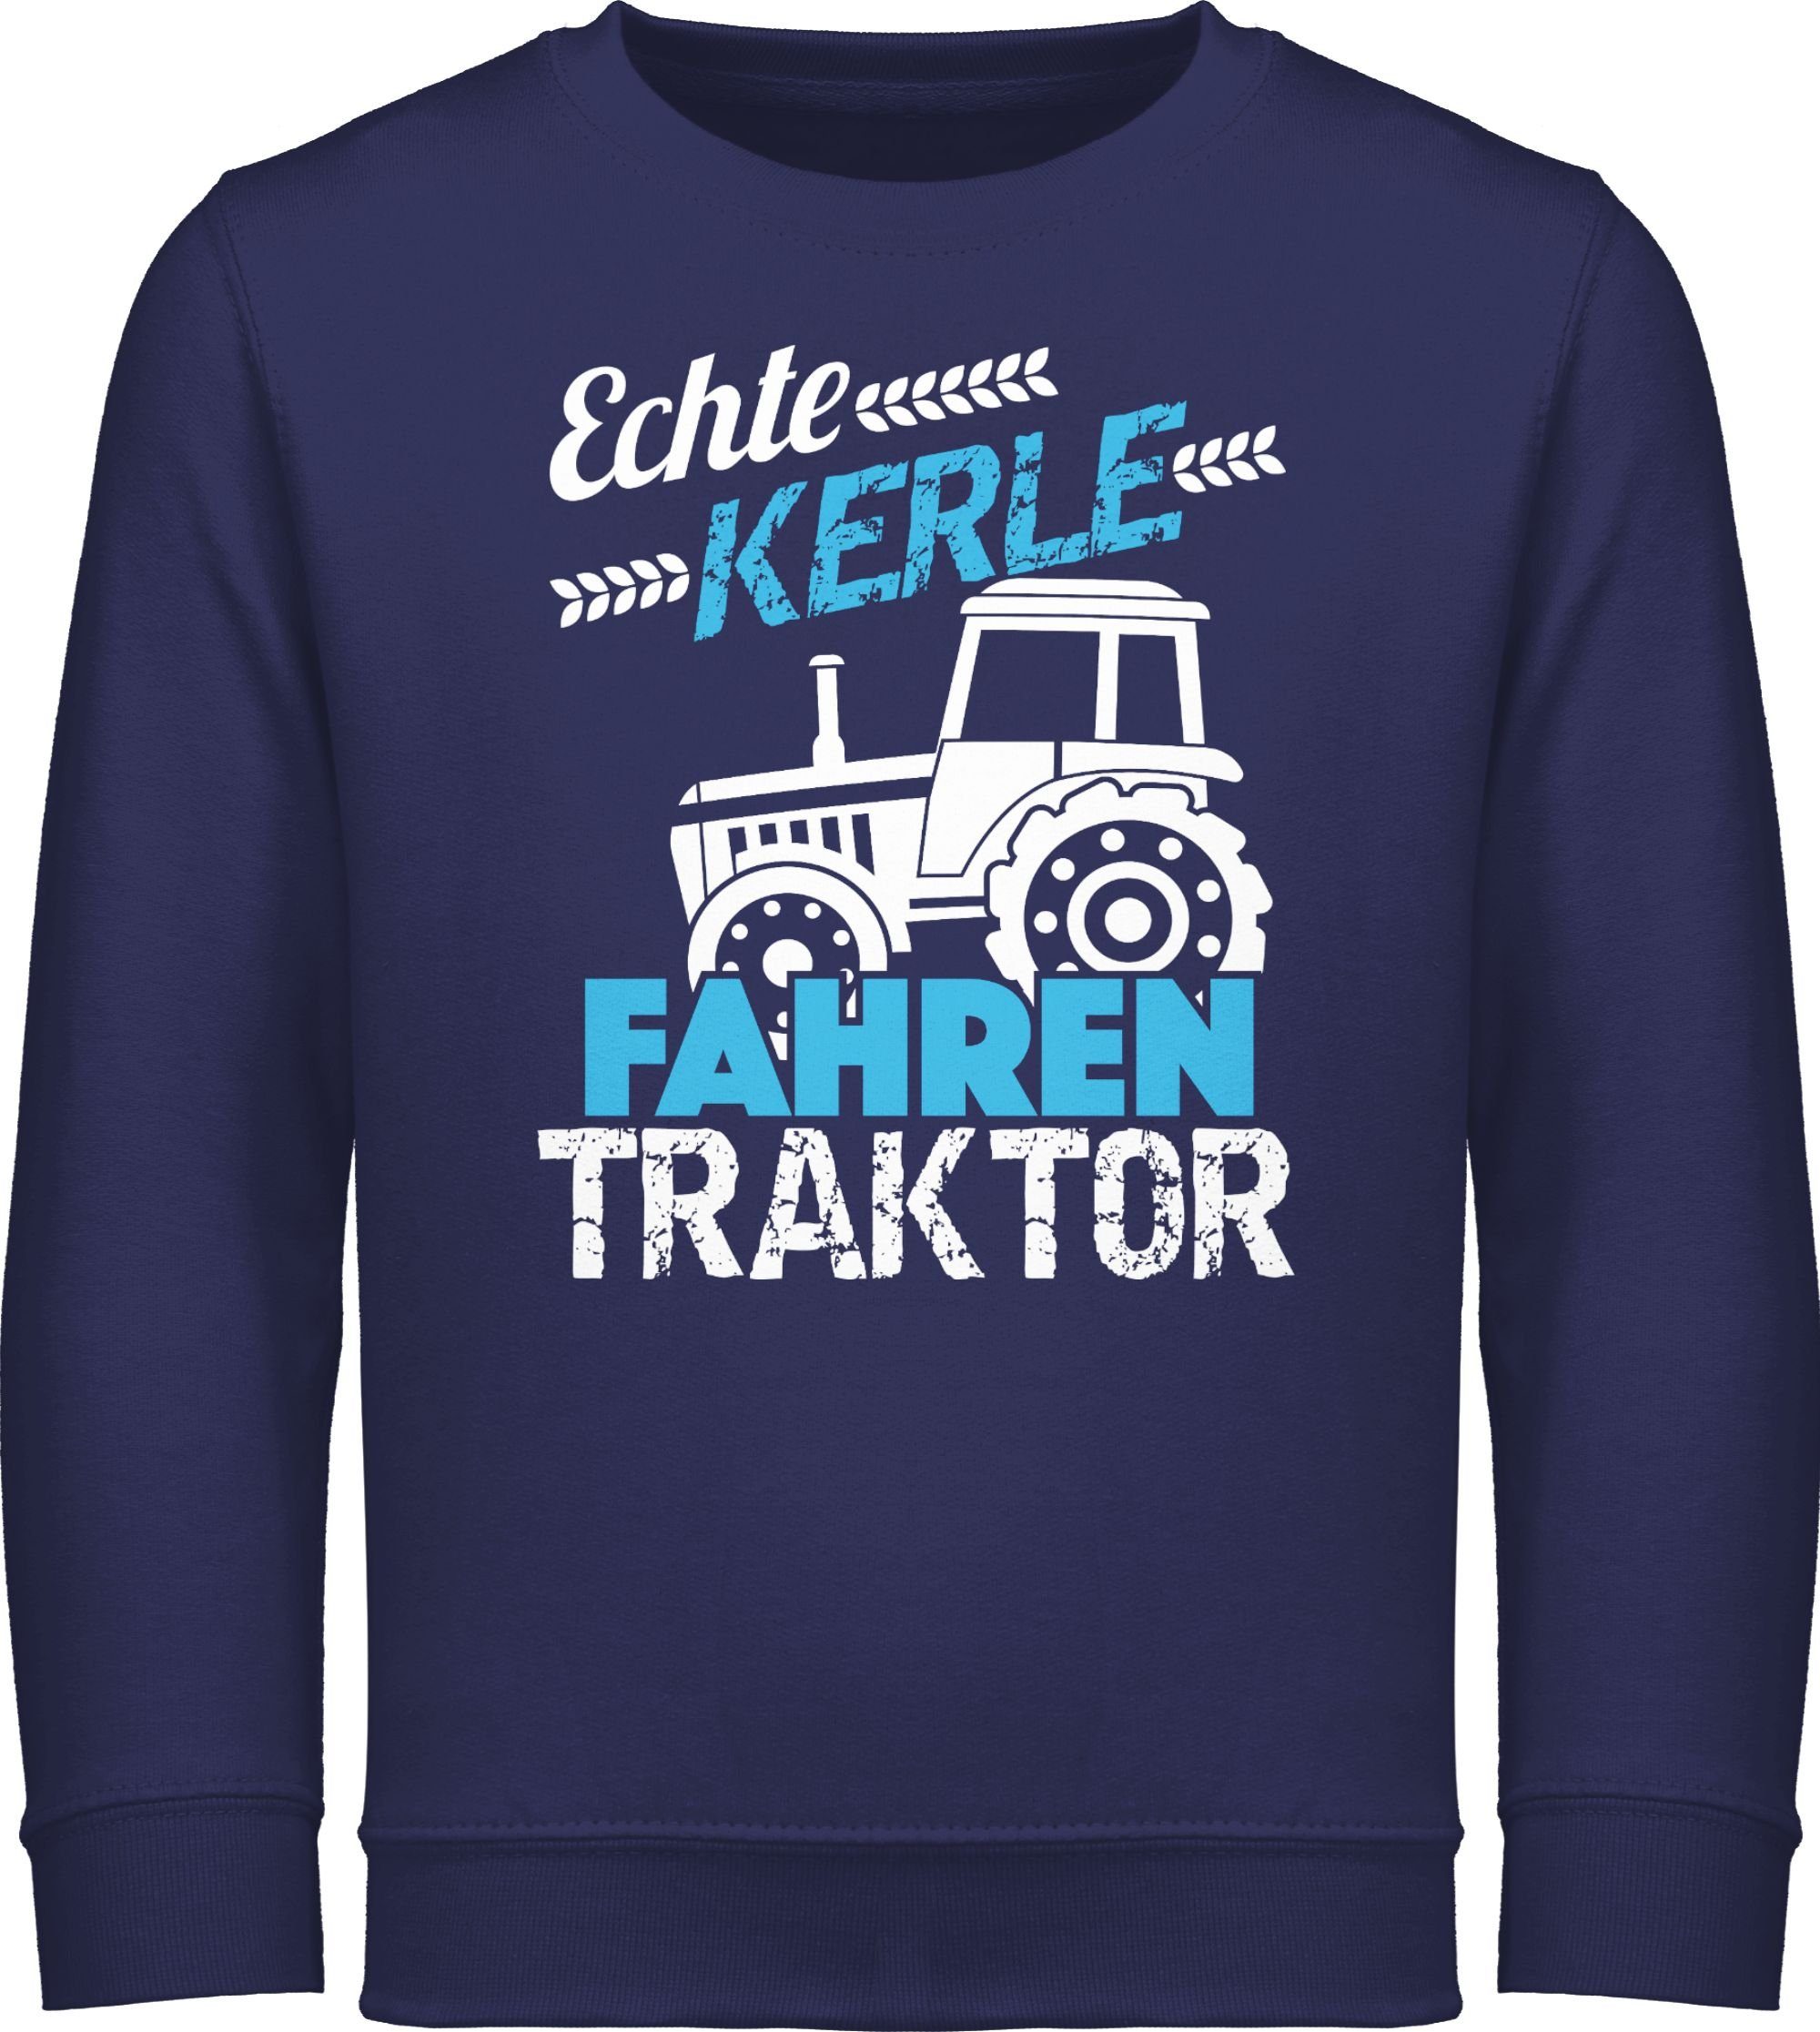 Shirtracer Sweatshirt Echte Kerle fahren Traktor Traktor 2 Navy Blau | Sweatshirts